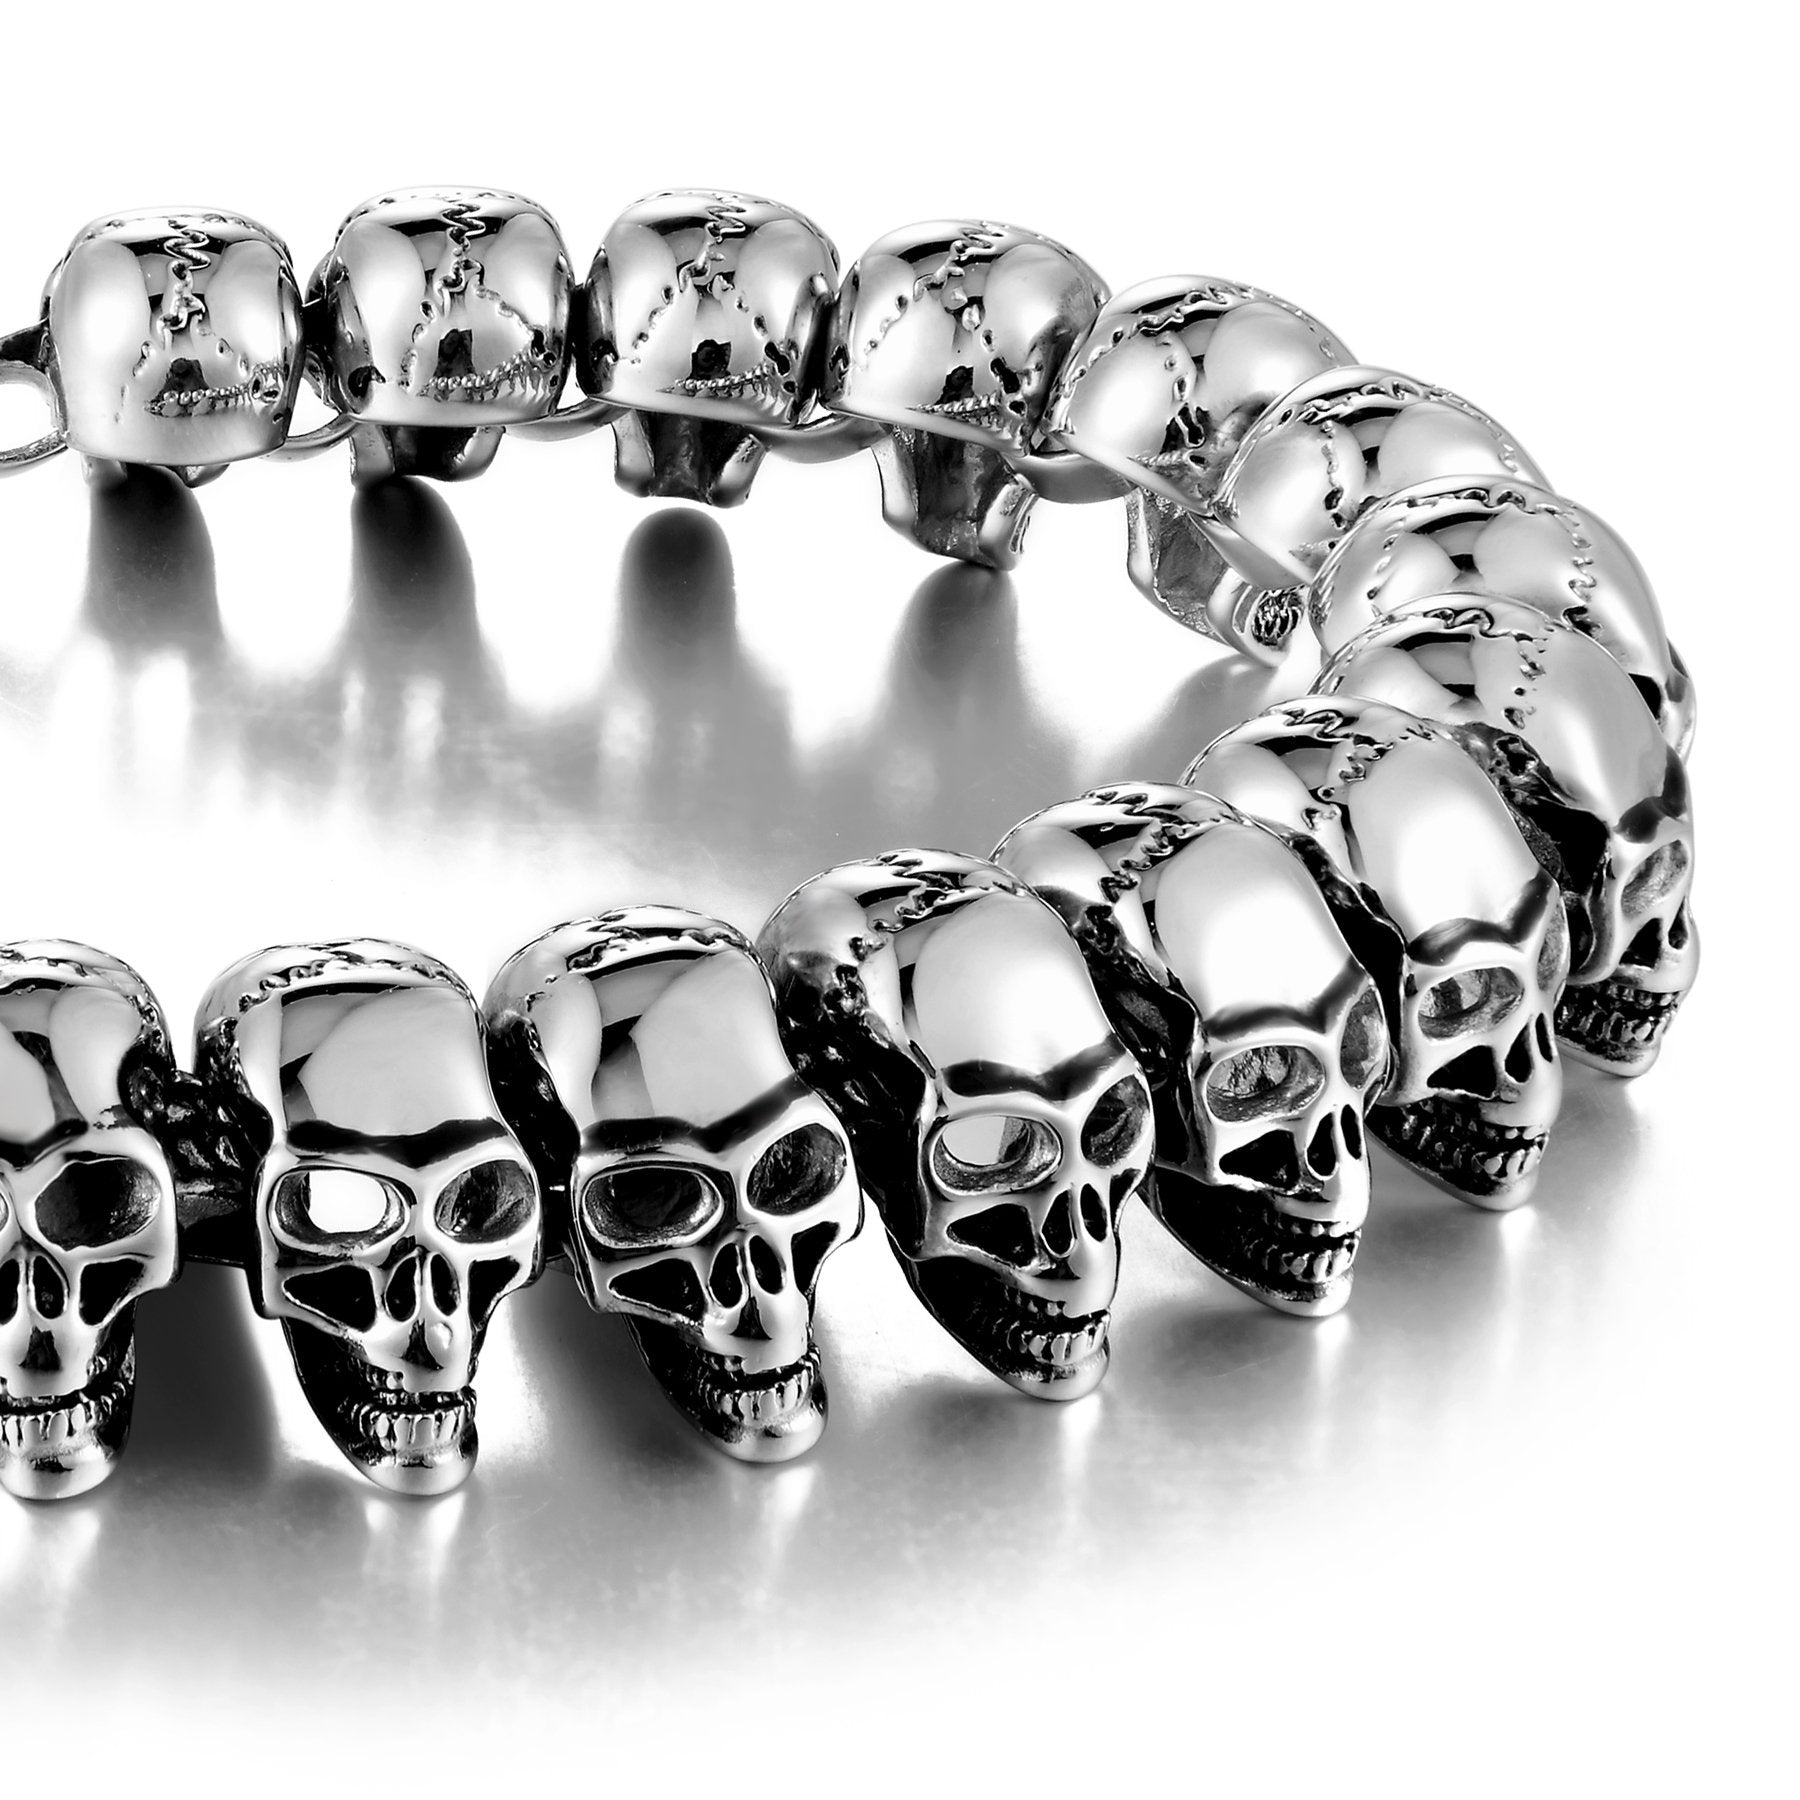 Urban Jewelry 316L Stainless Steel Skull Head Gothic Biker Bracelet for Men (Silver, 21.5 cm)